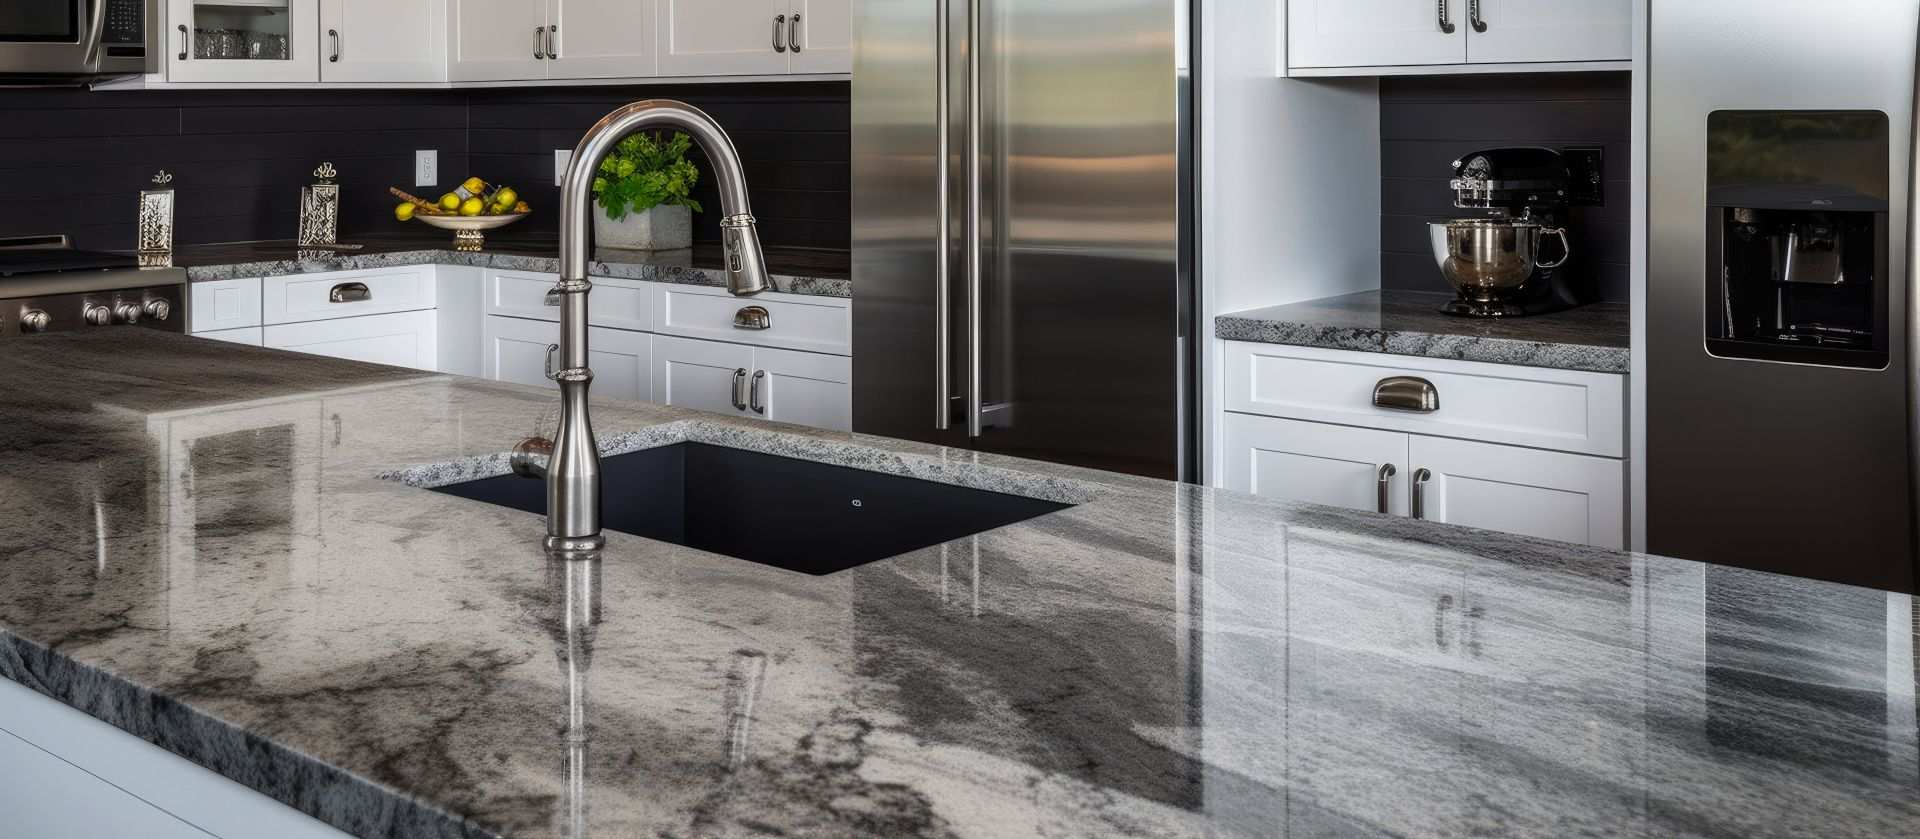 Shiny Granite worksurface in kitchen